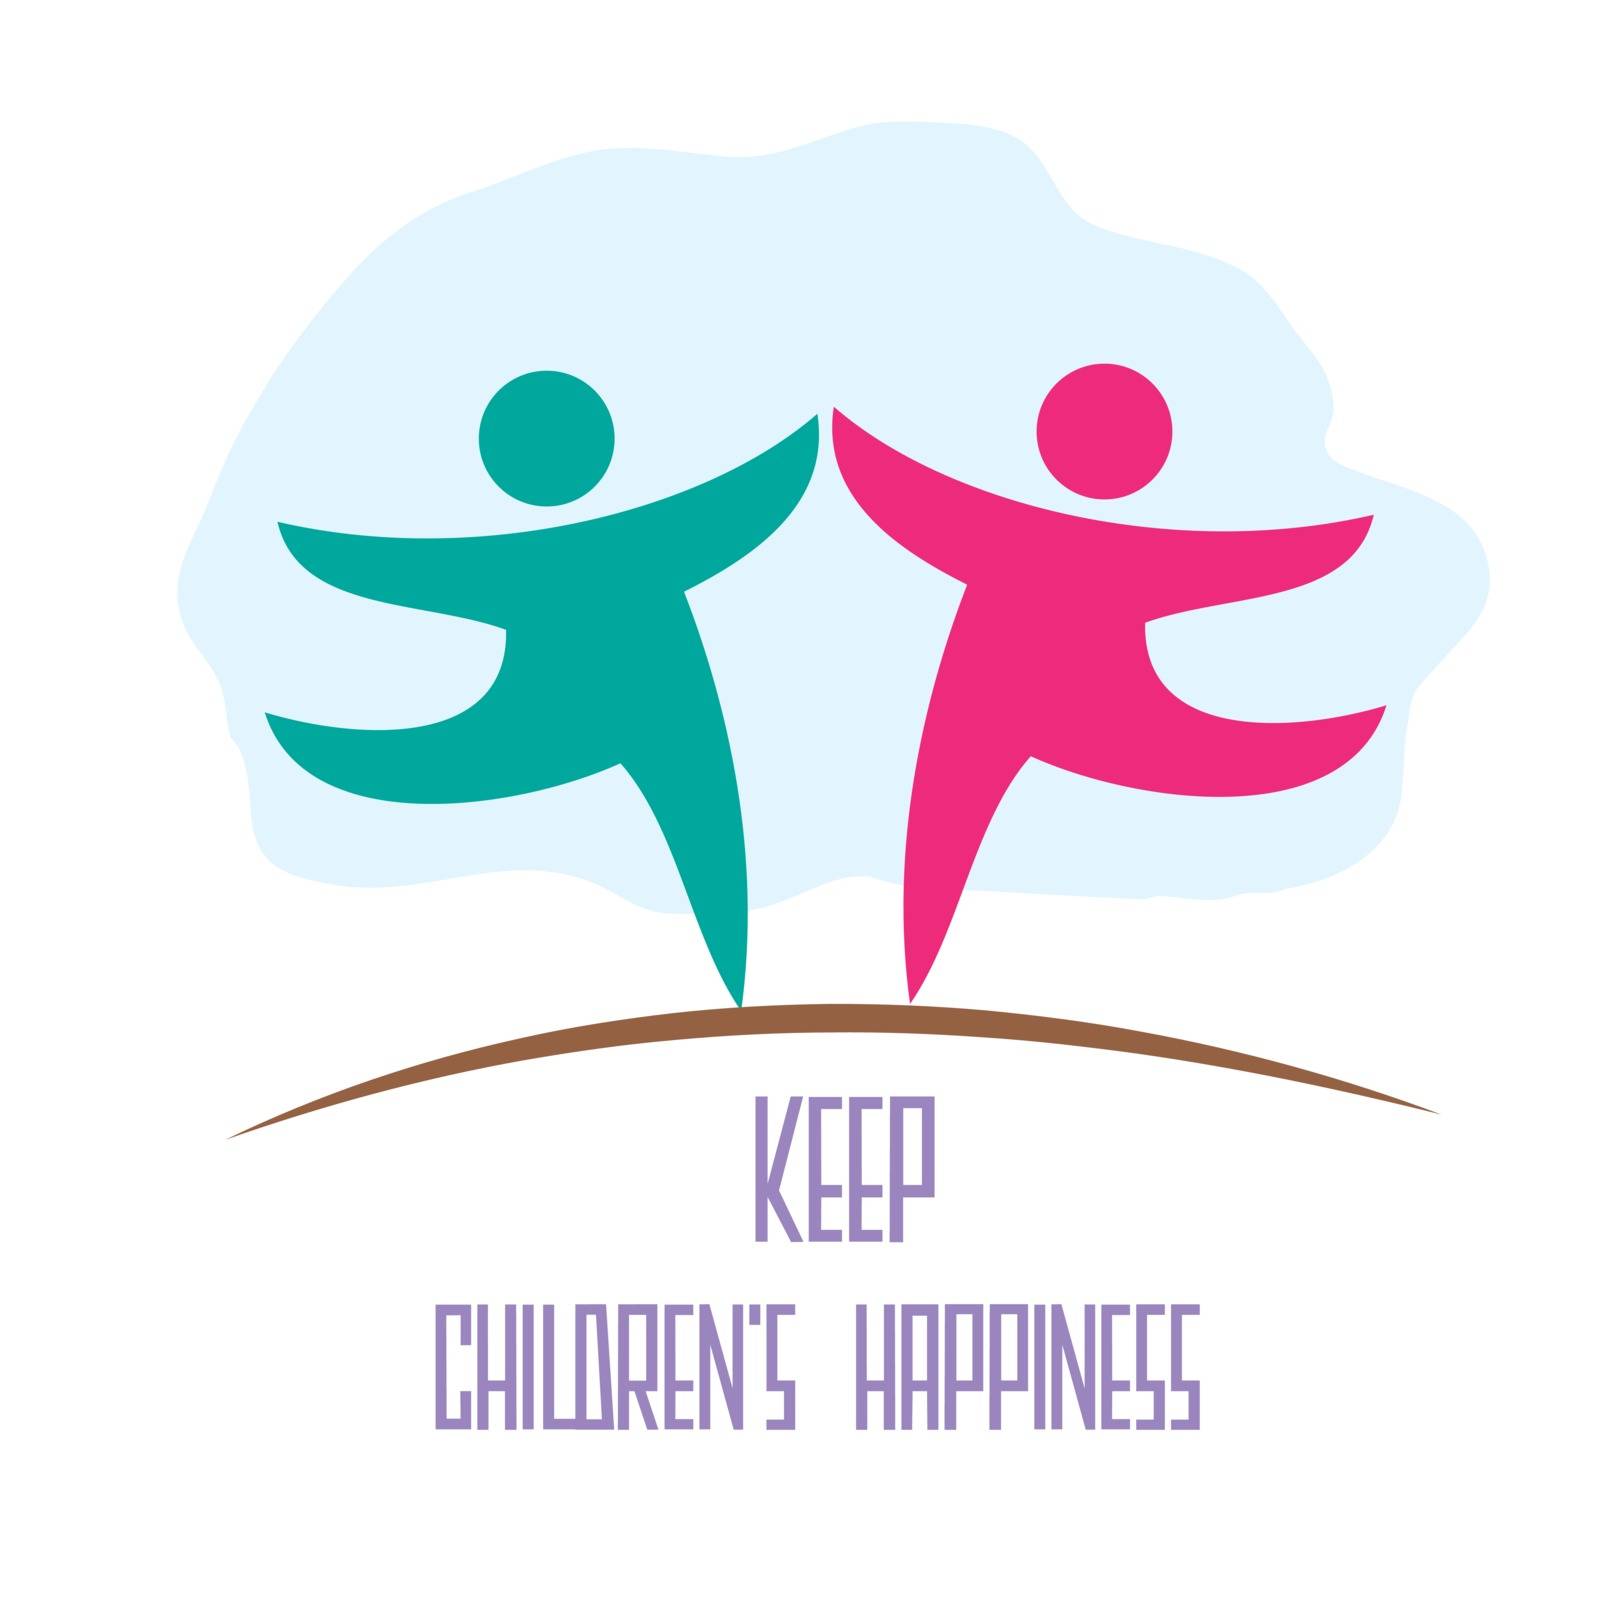 keep children's happiness by balasoiu